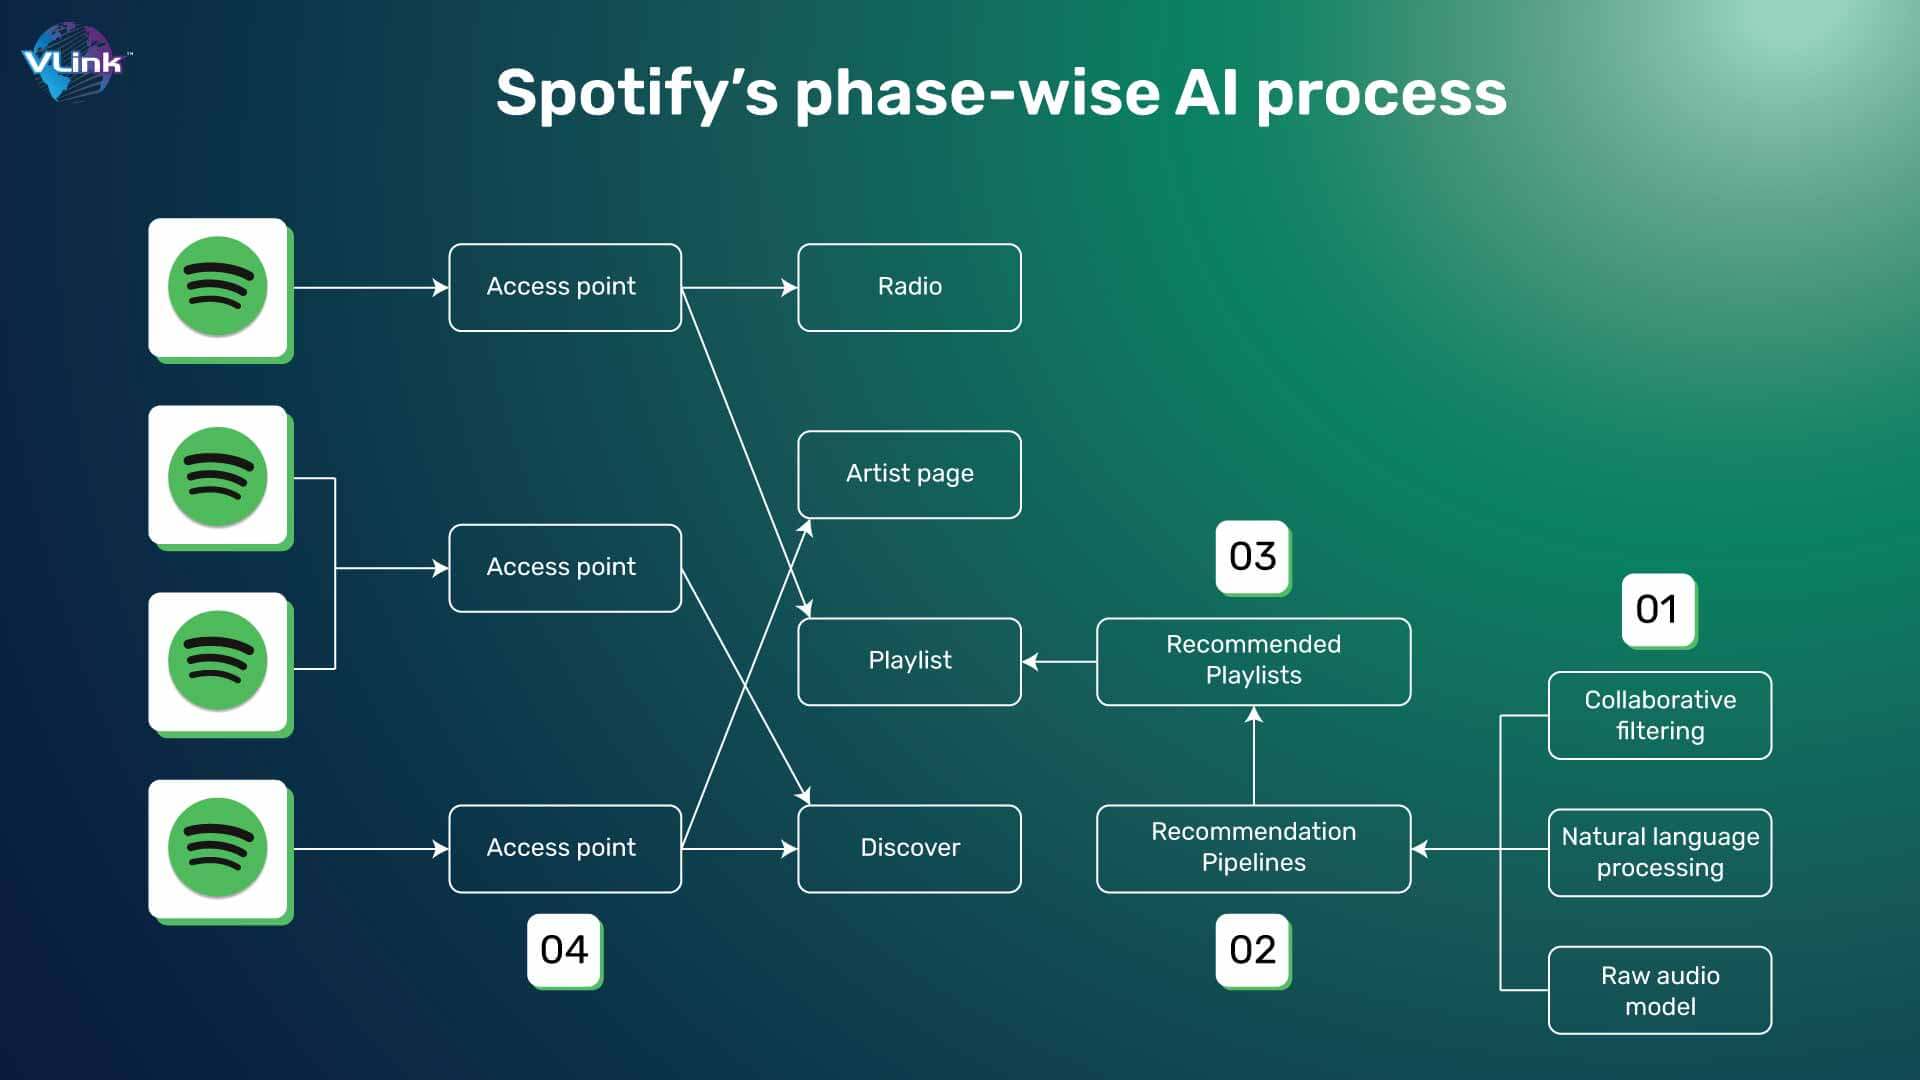 Spotify’s phase-wise AI process